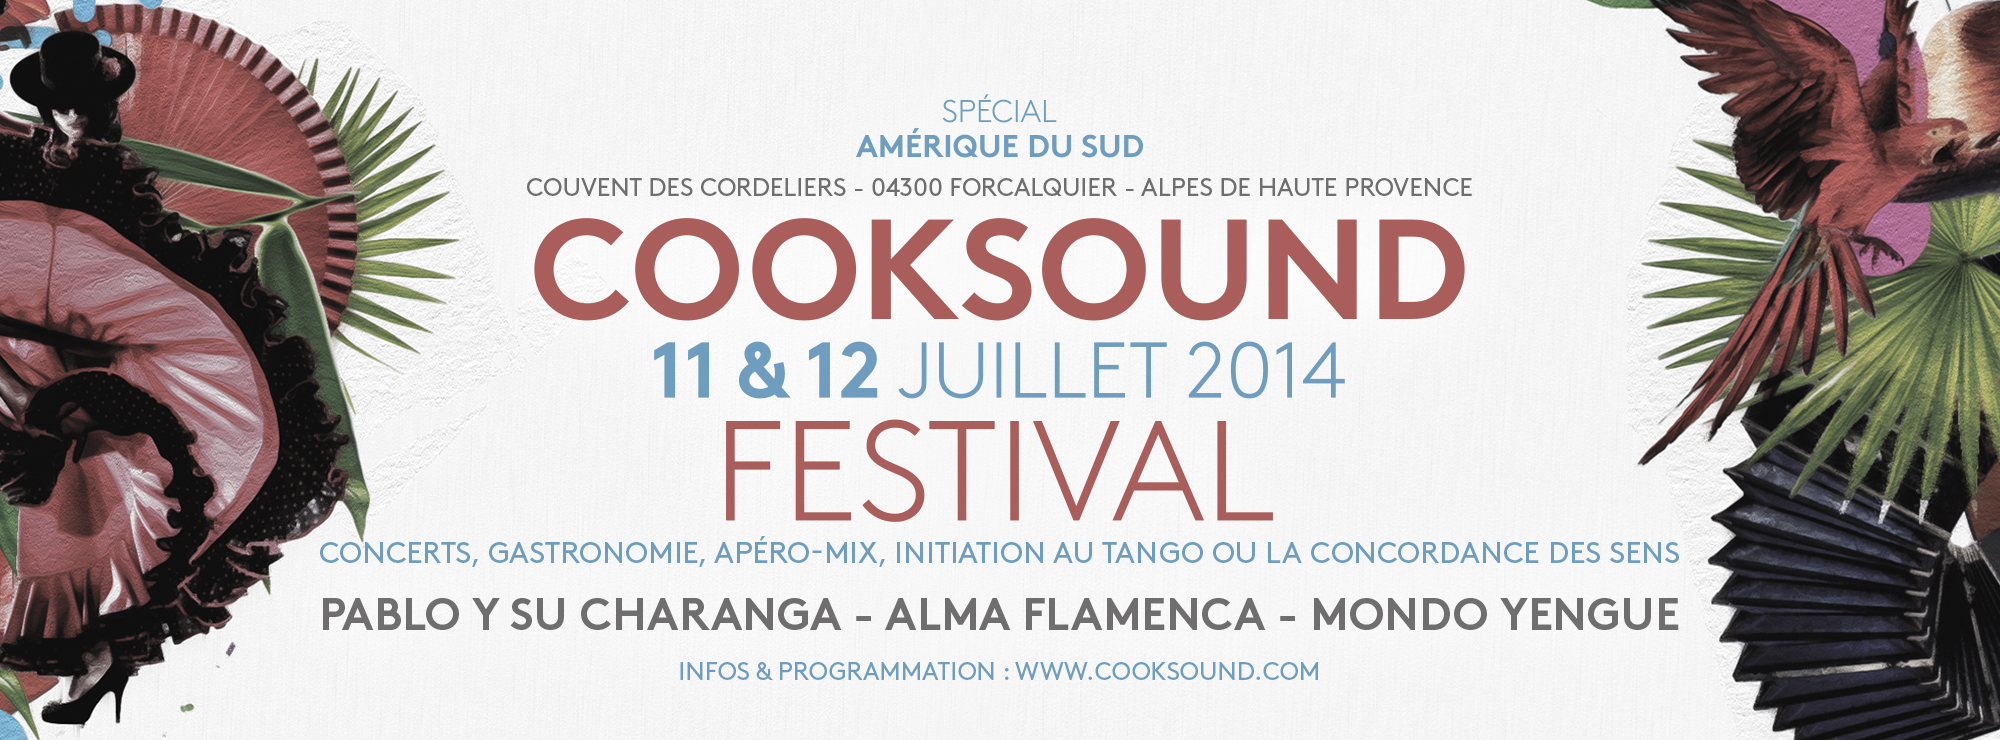 Cooksound festival